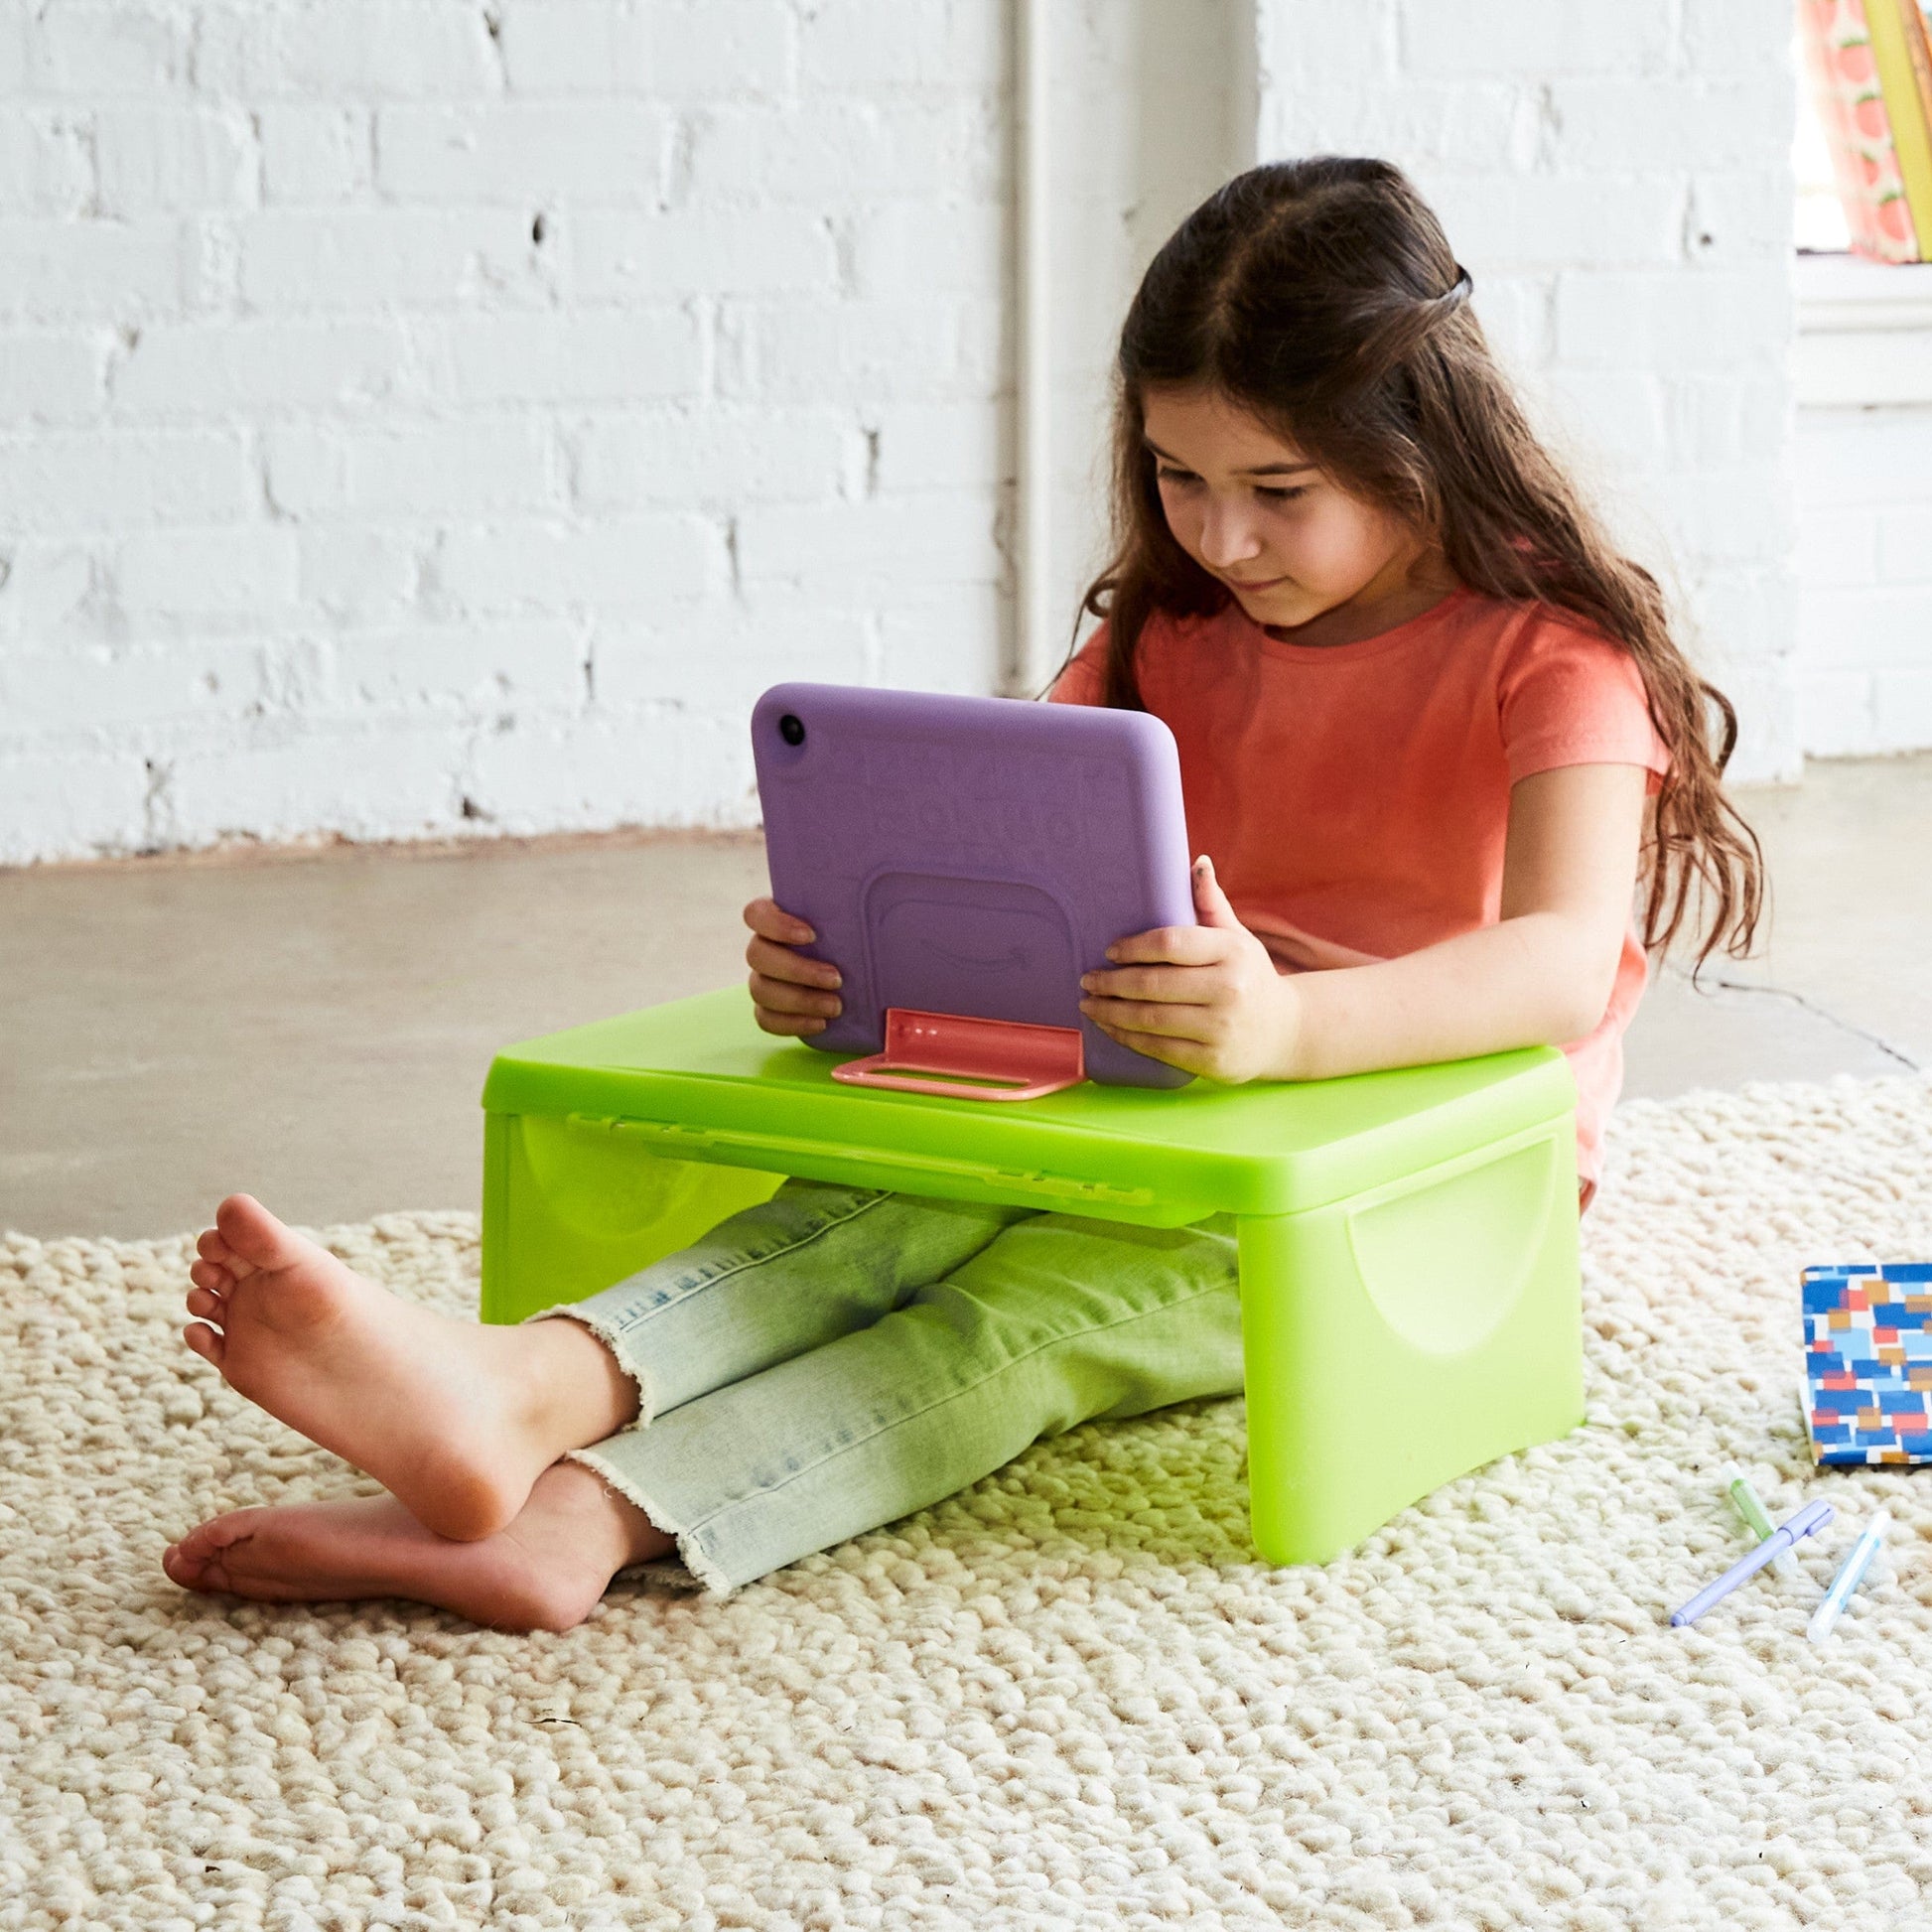 Best Desks for Kids: 12 Best-selling Kid Desks to Make Home Learning &  Homework Easier for Students, Shopping Guides